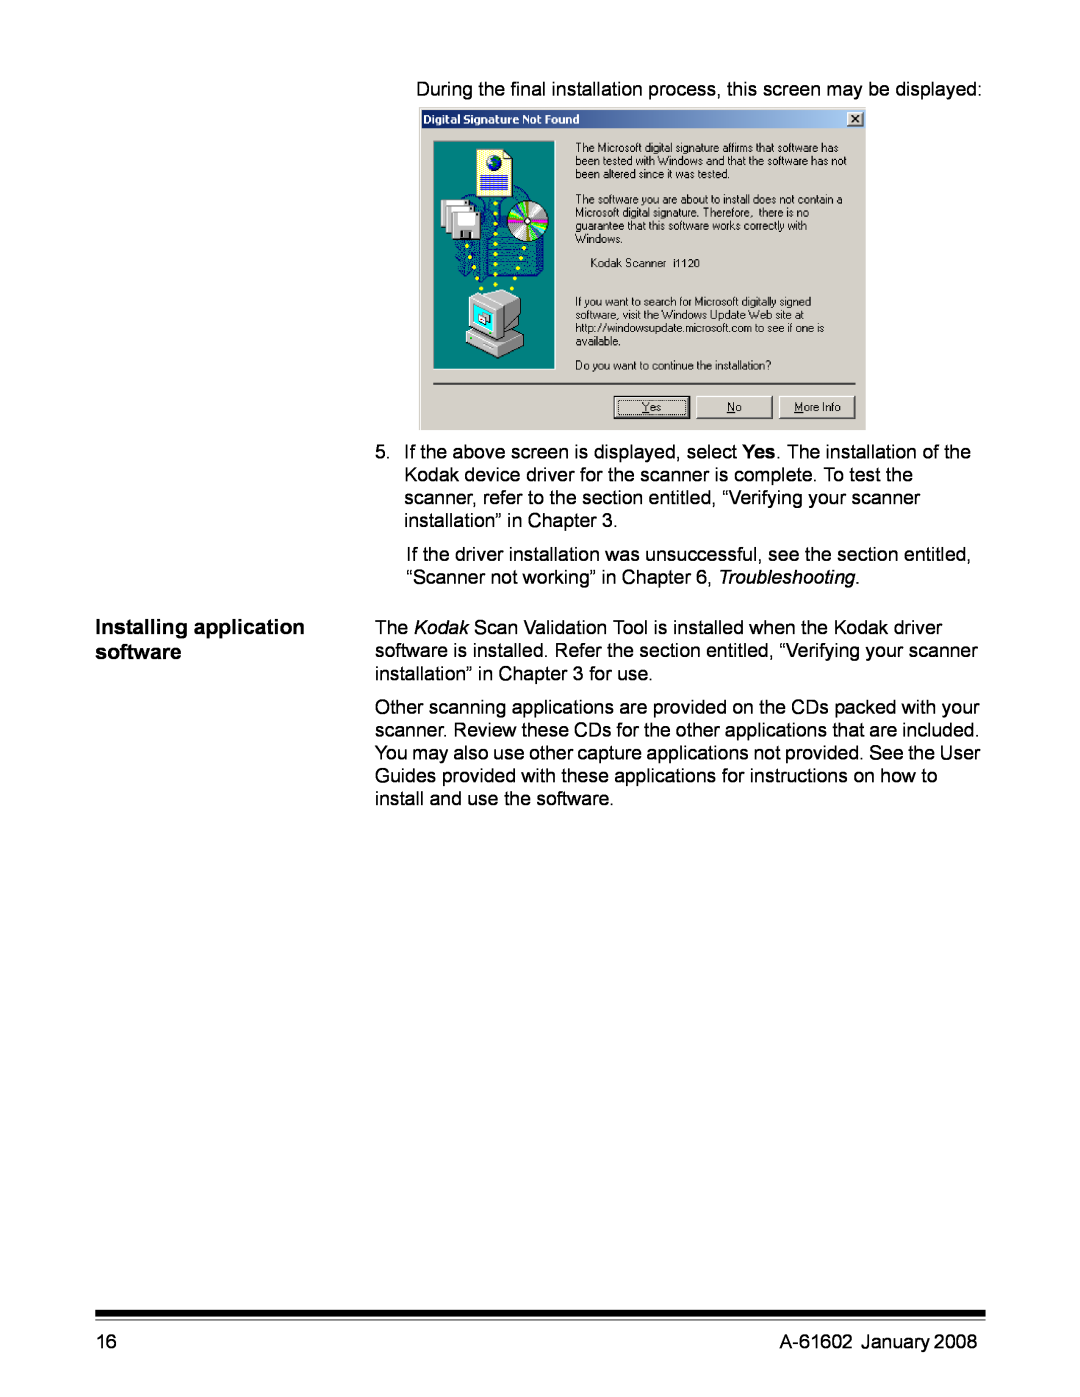 Kodak A-61602 manual Installing application software 